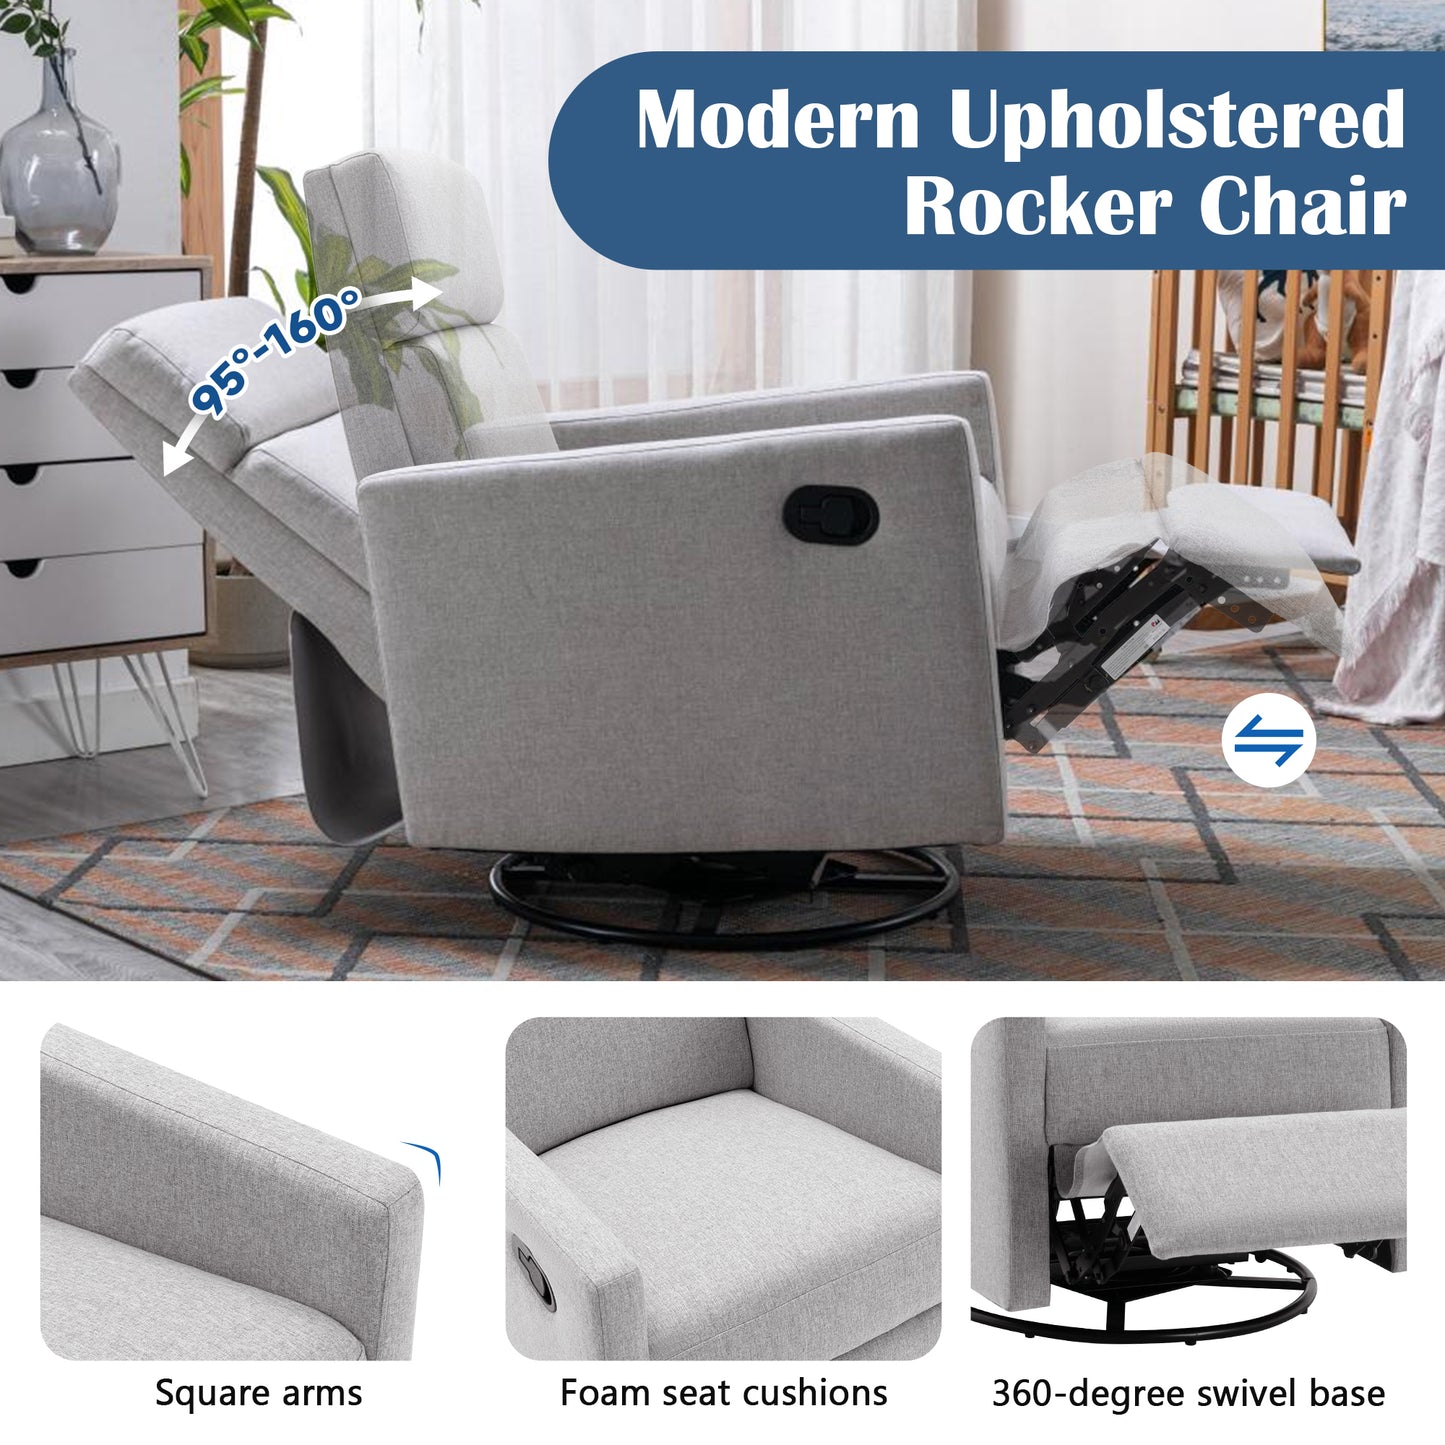 1st Choice Modern Rocker Seating Glider Swivel Recliner Chair in Gray